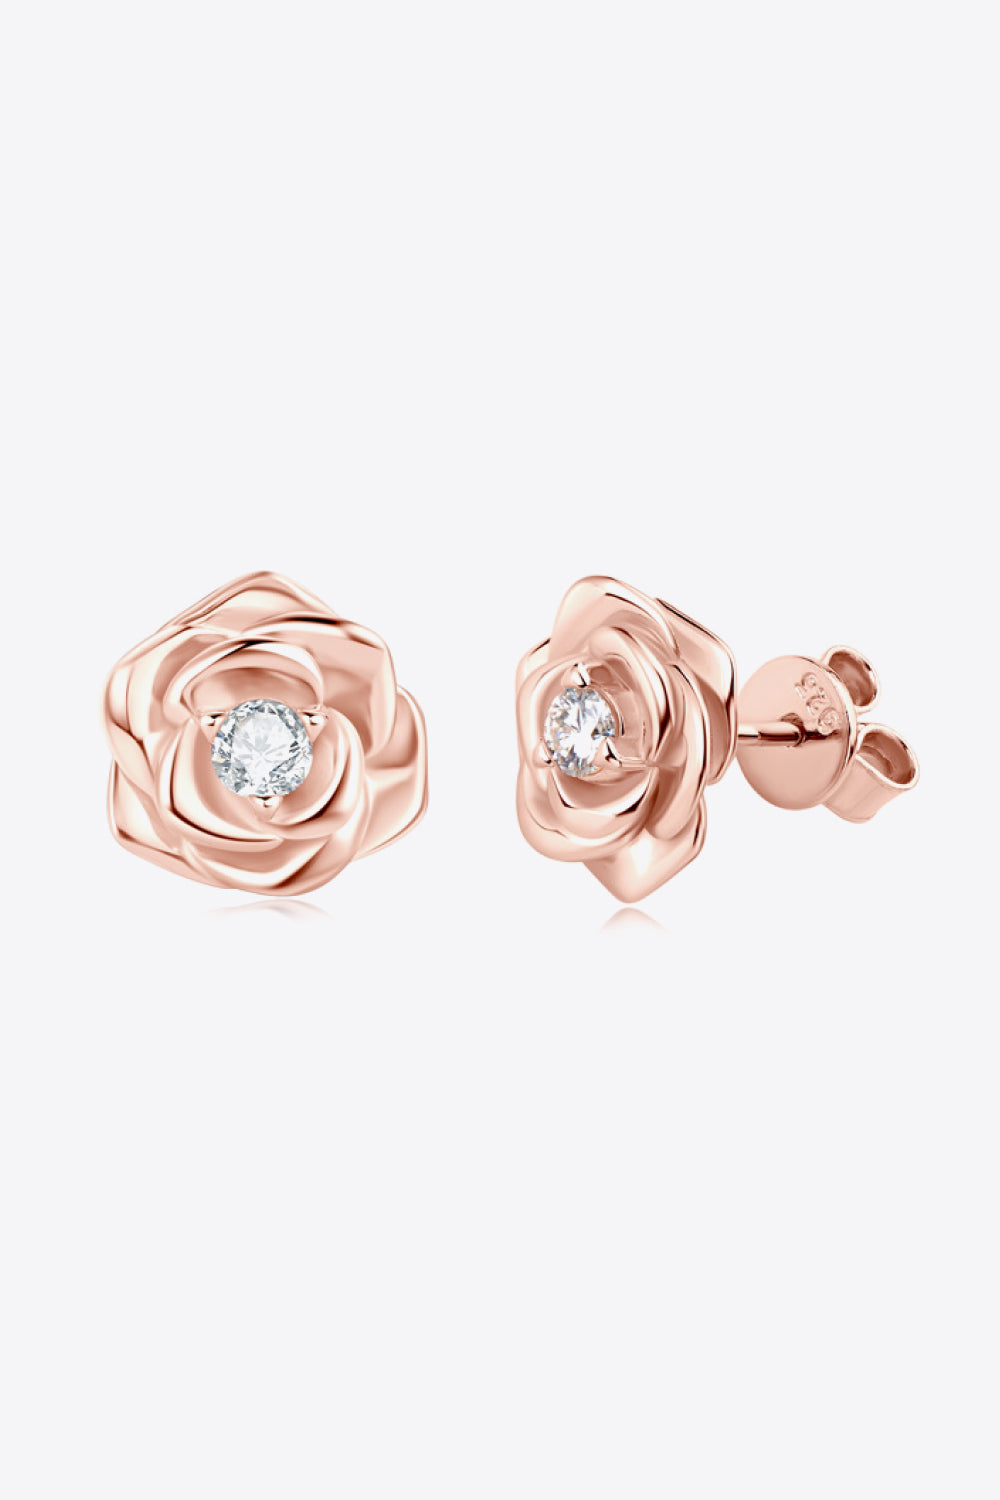 ROSE GOLD ONE SIZE - Moissanite Flower 925 Sterling Silver Earrings - silver or rose gold - earrings at TFC&H Co.